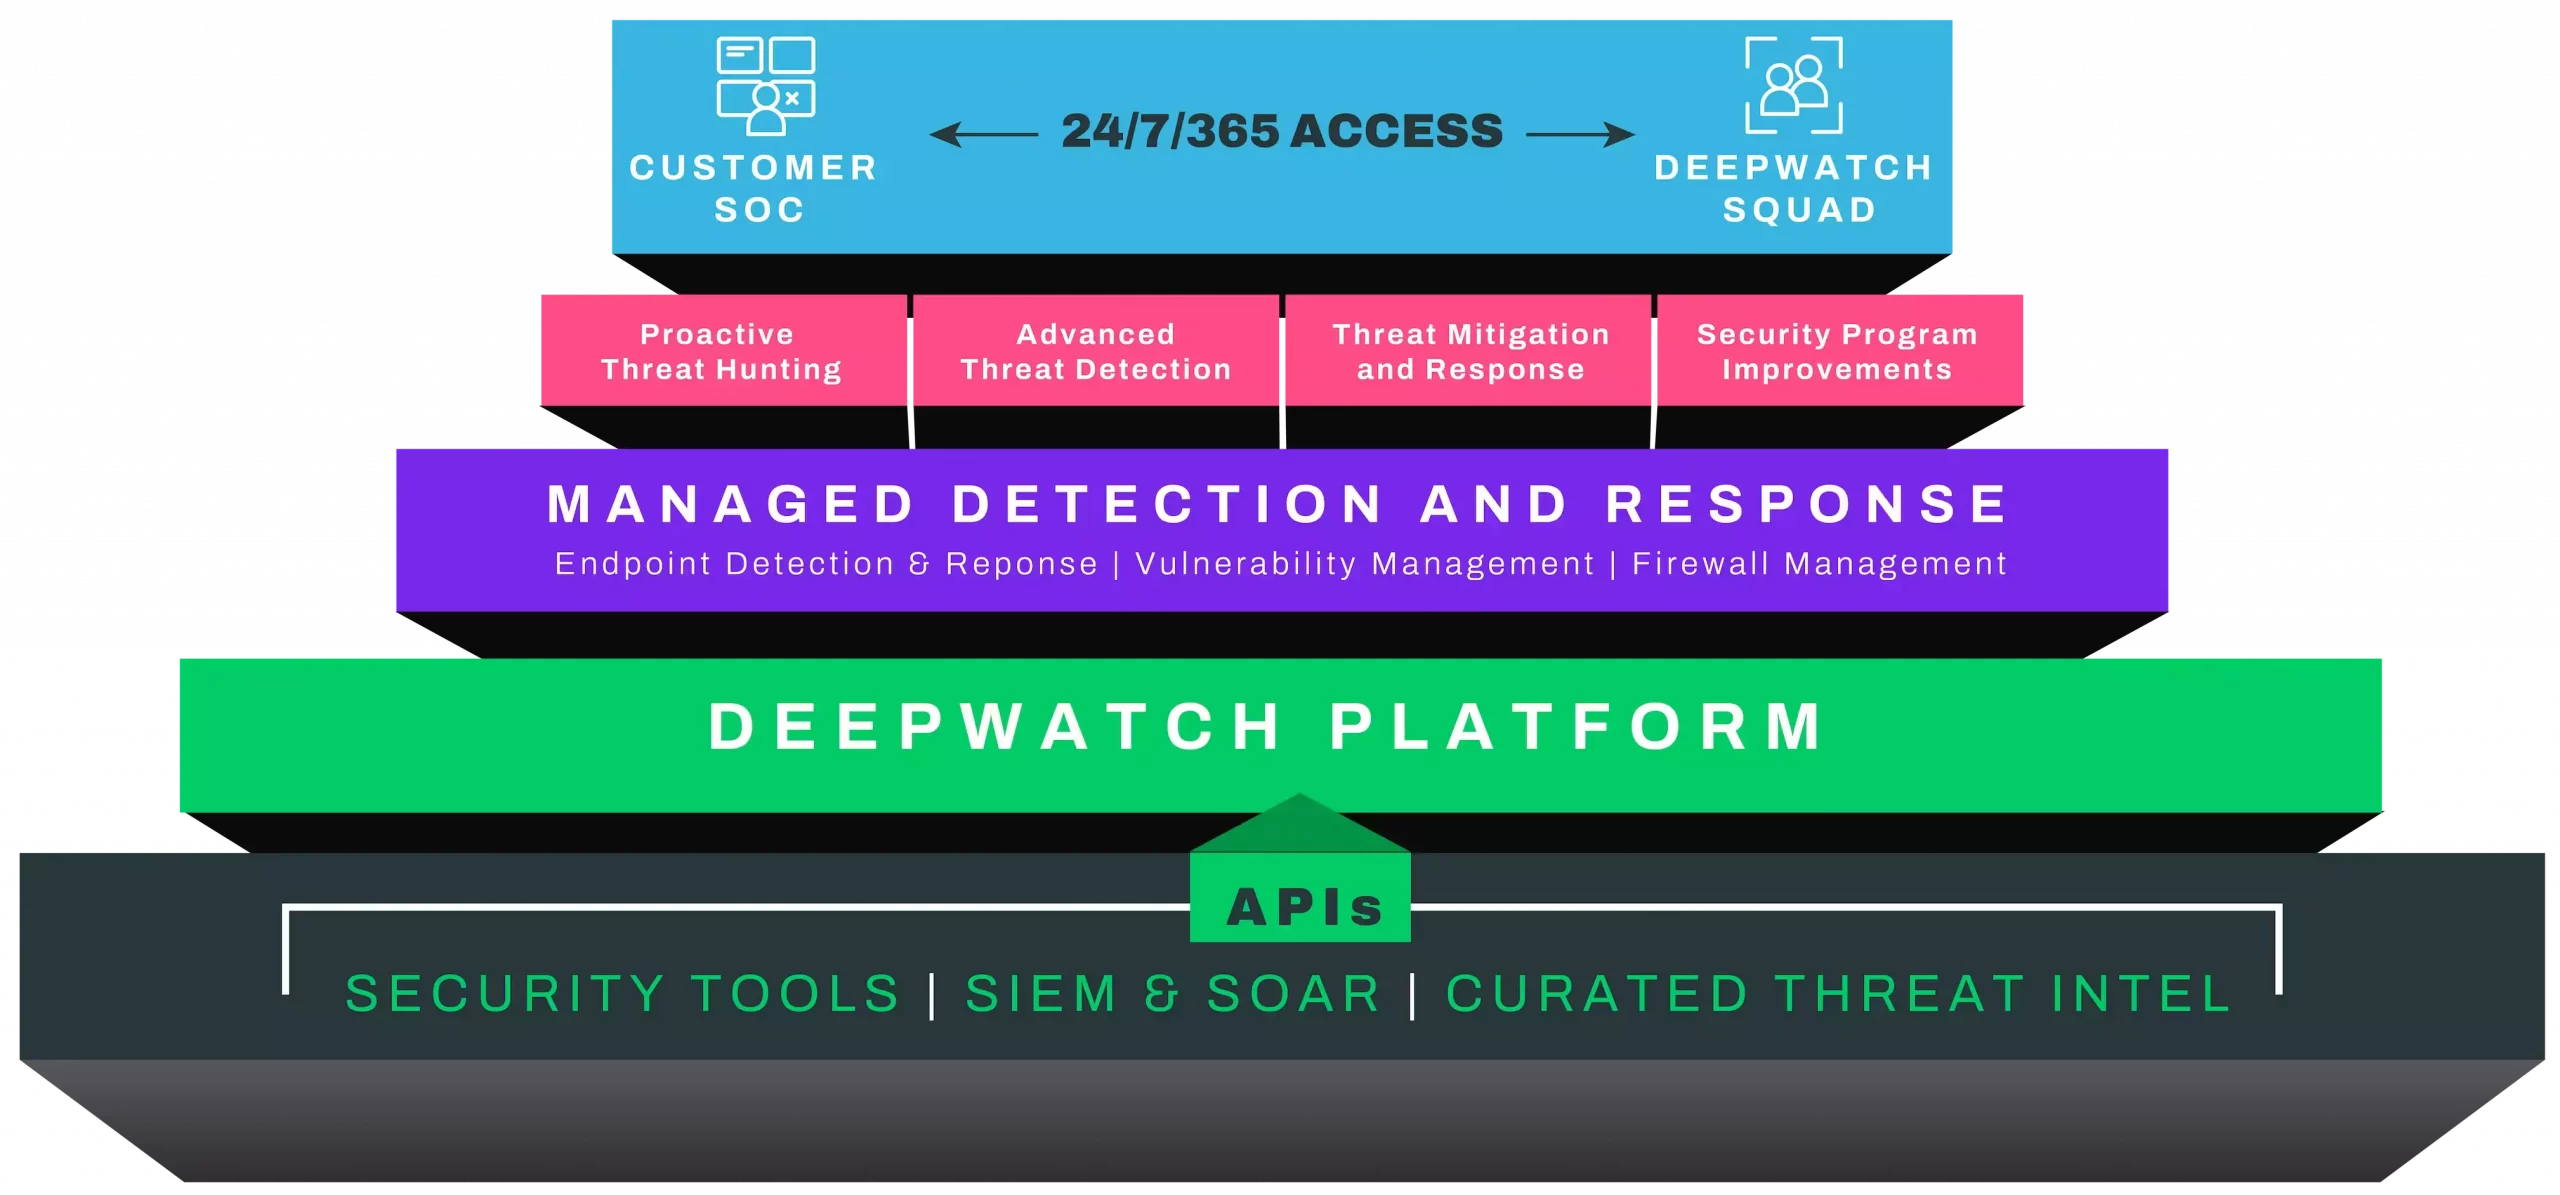 Deepwatch Platform